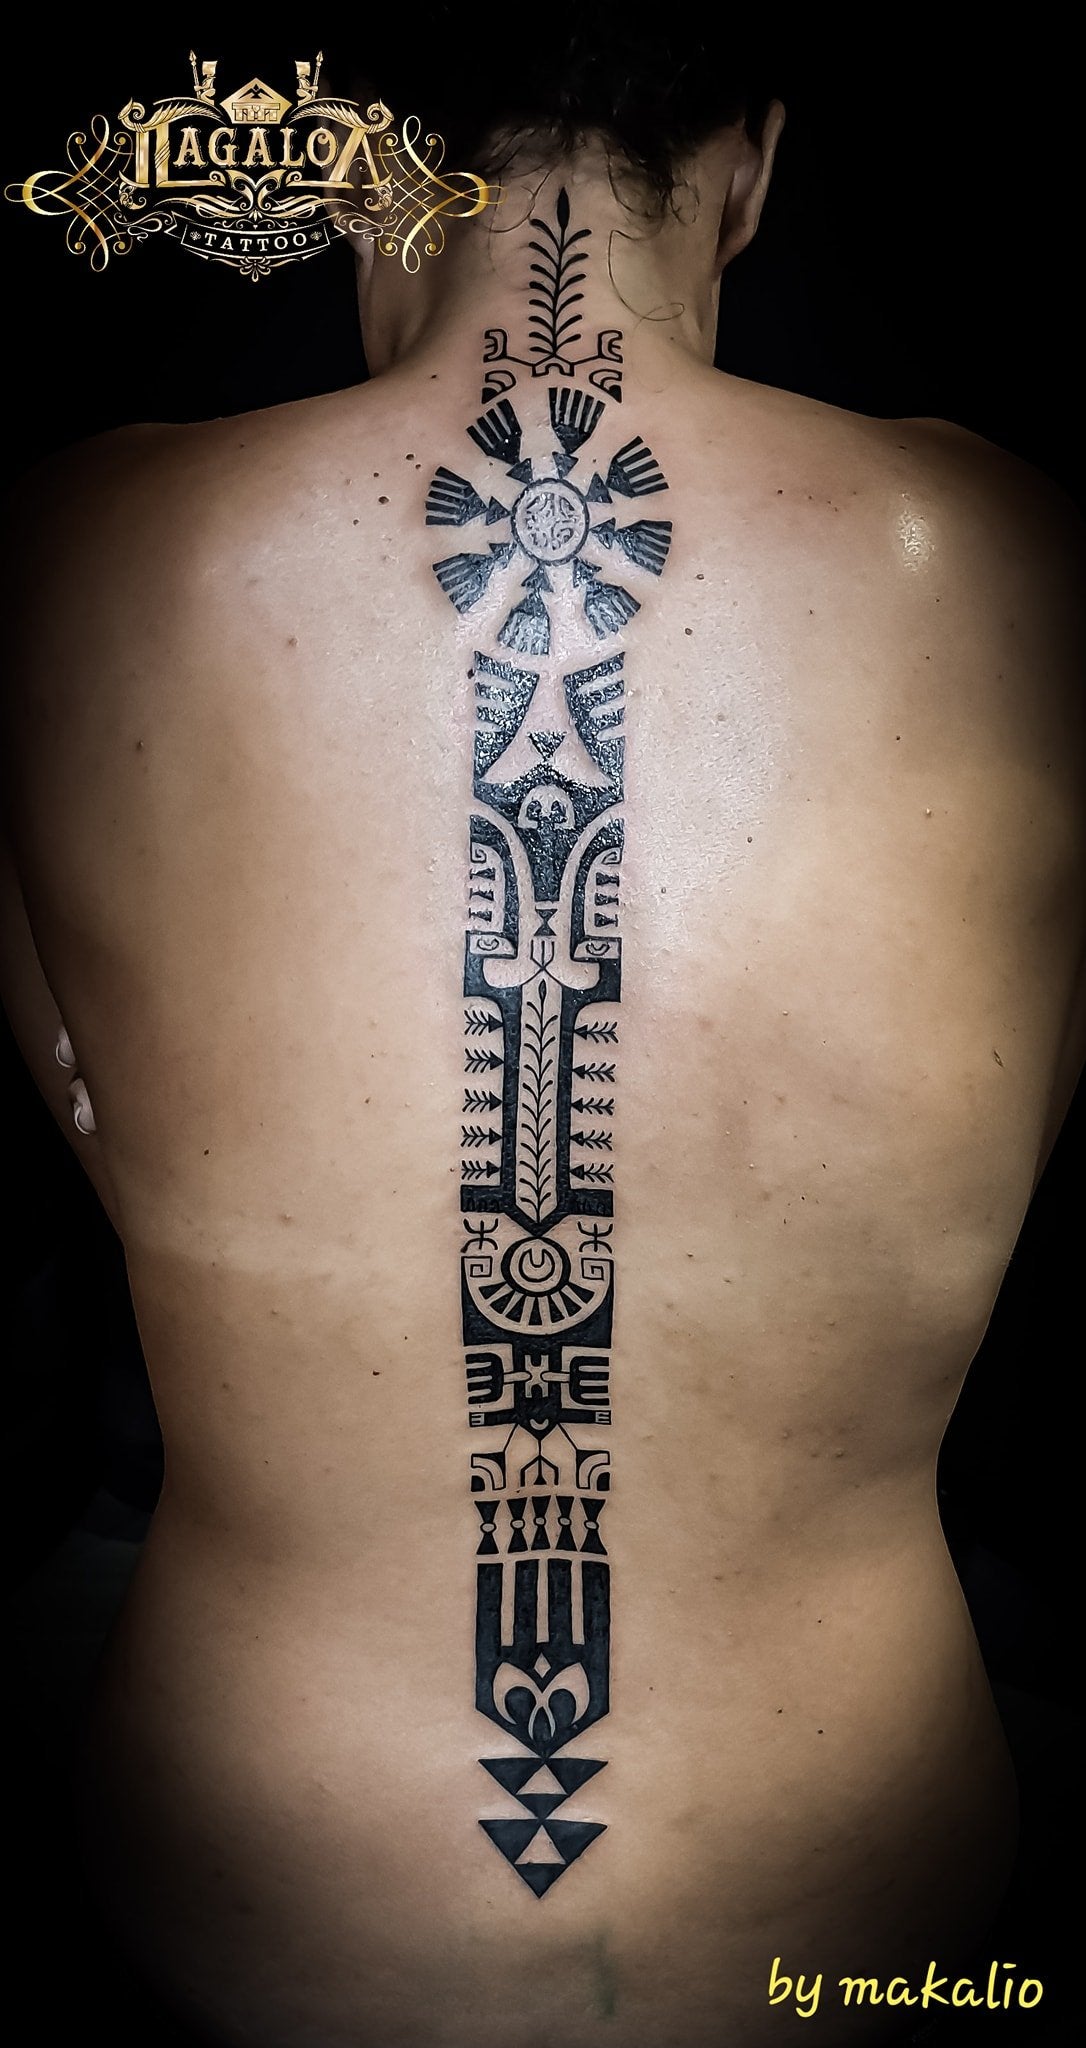 Tattoo uploaded by FilippoMarcato  Spine maori maori spinetattoo spine  arrows  Tattoodo